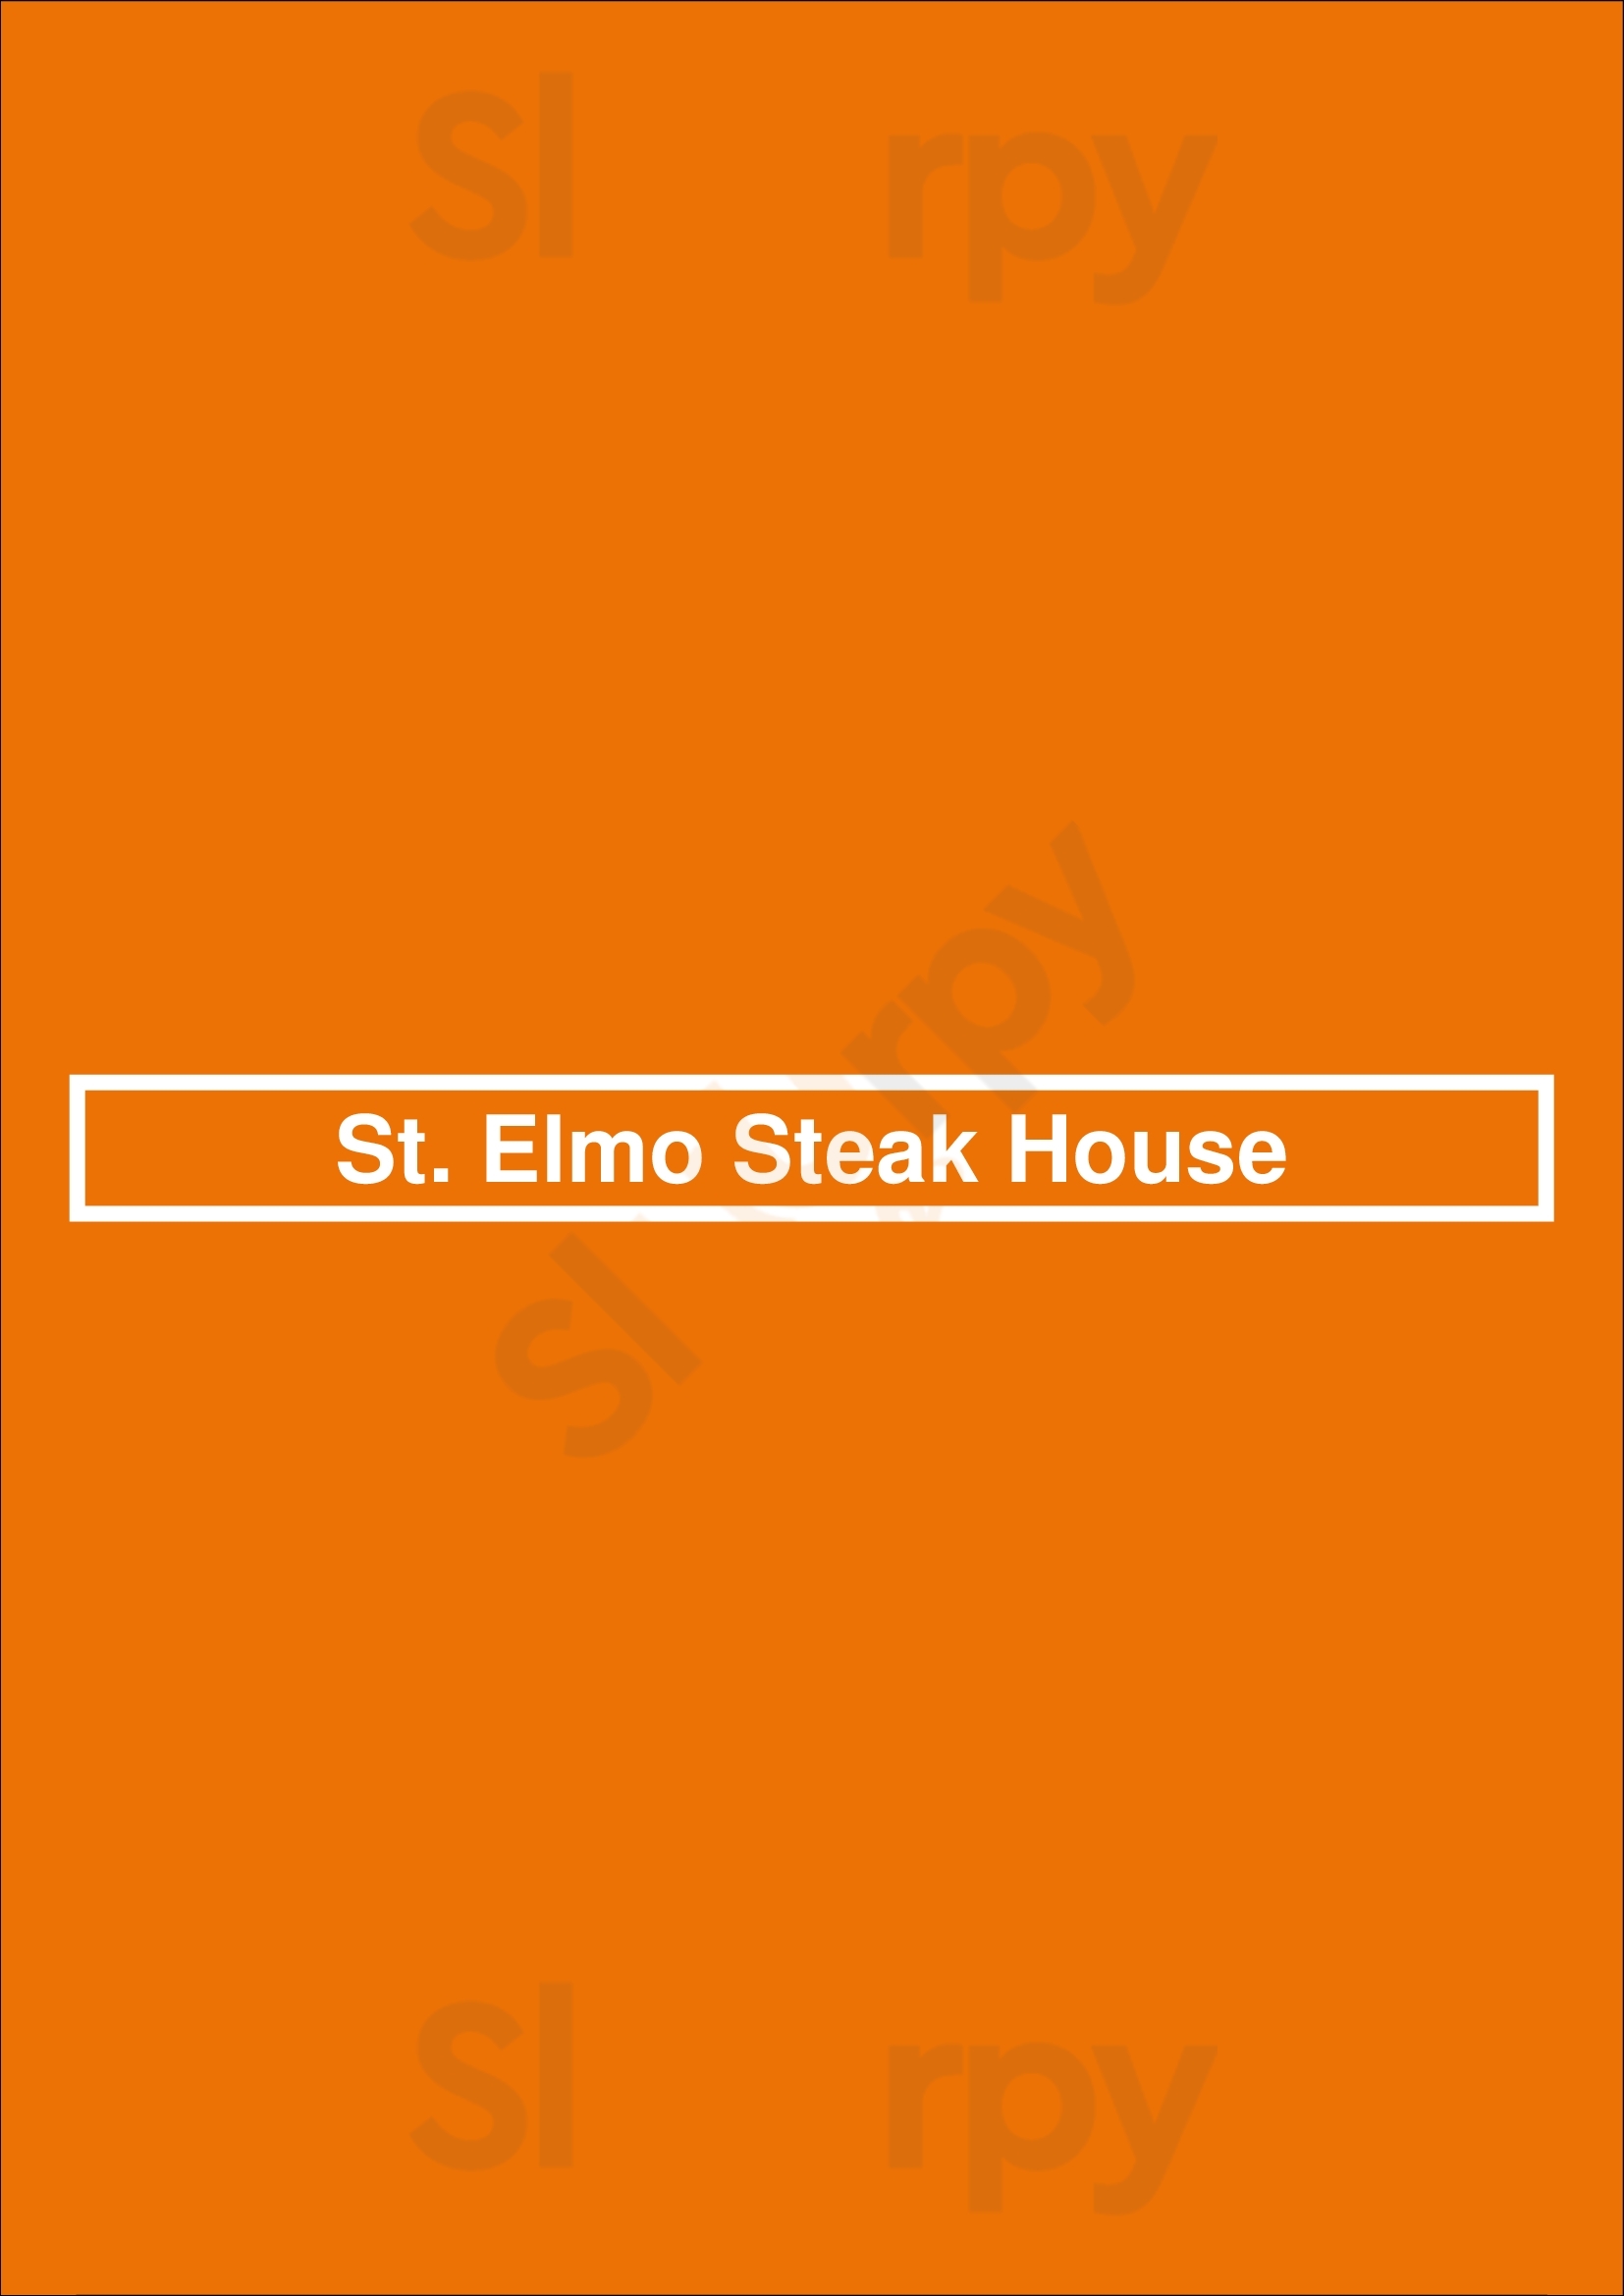 St. Elmo Steak House Indianapolis Menu - 1